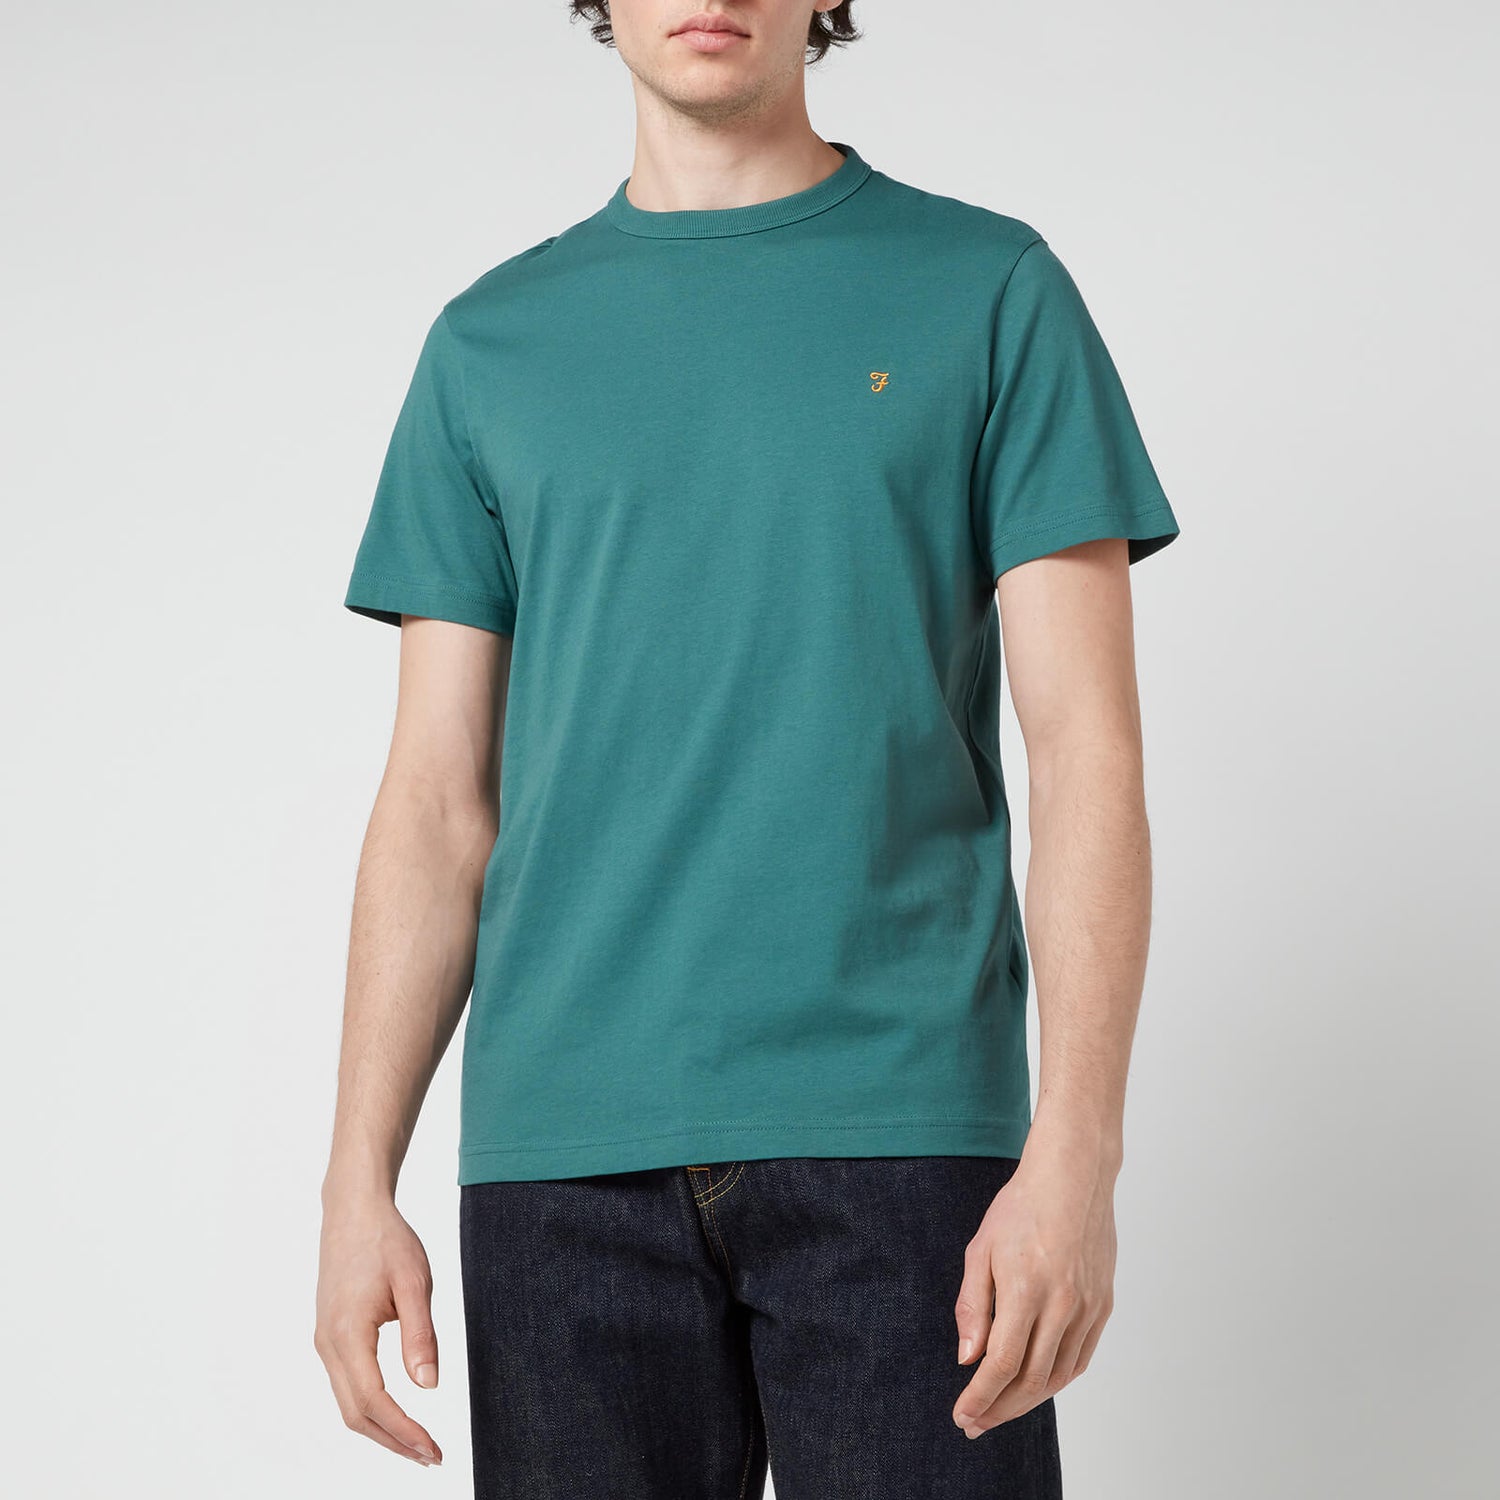 Farah Men's Danny T-Shirt - Pine Green - S